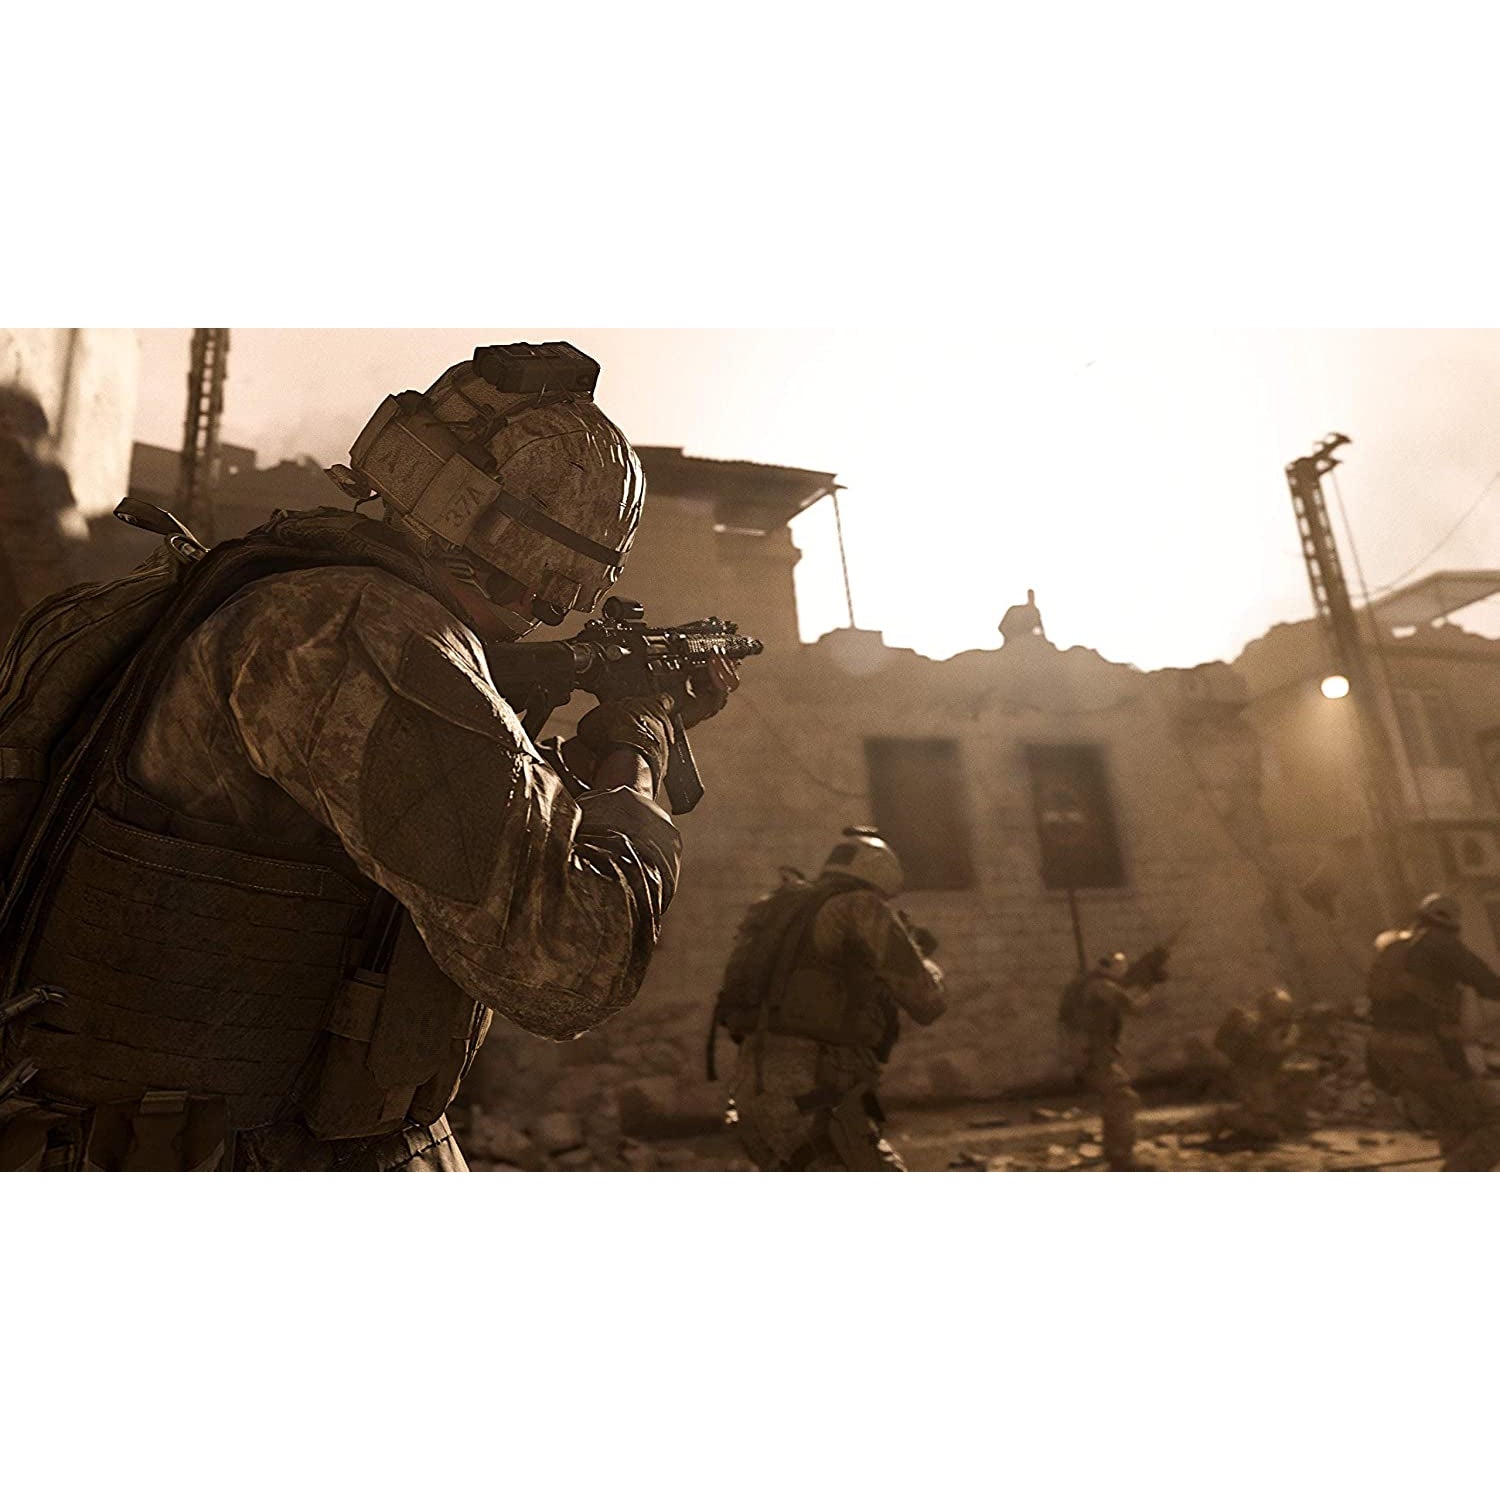 Call of Duty Modern Warfare (Xbox One) - New